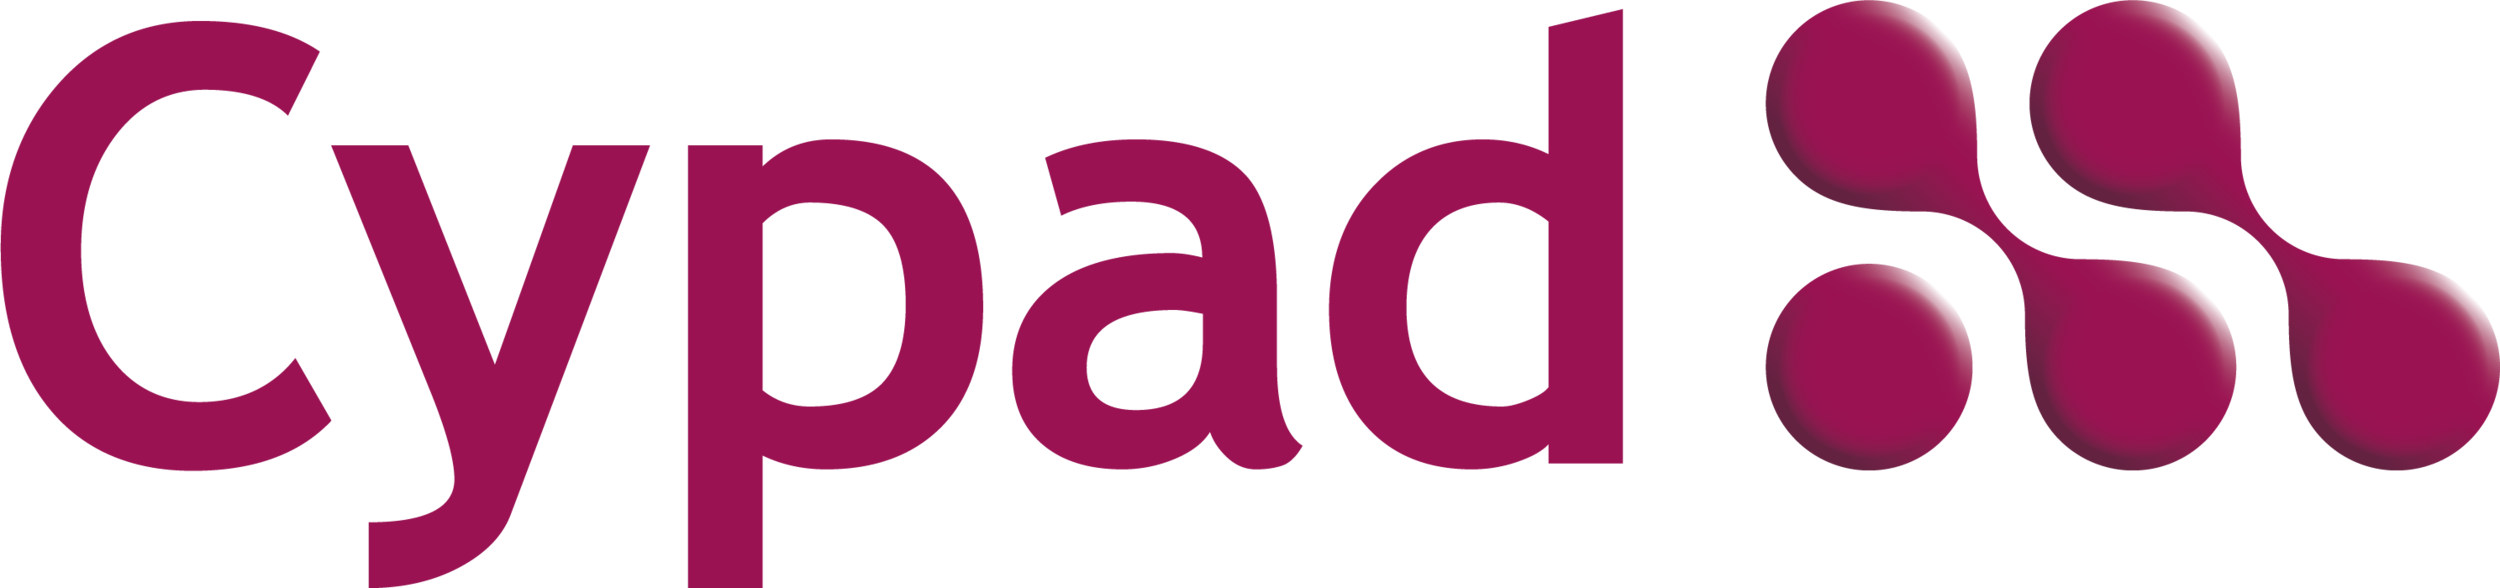 CYPAD logo.png